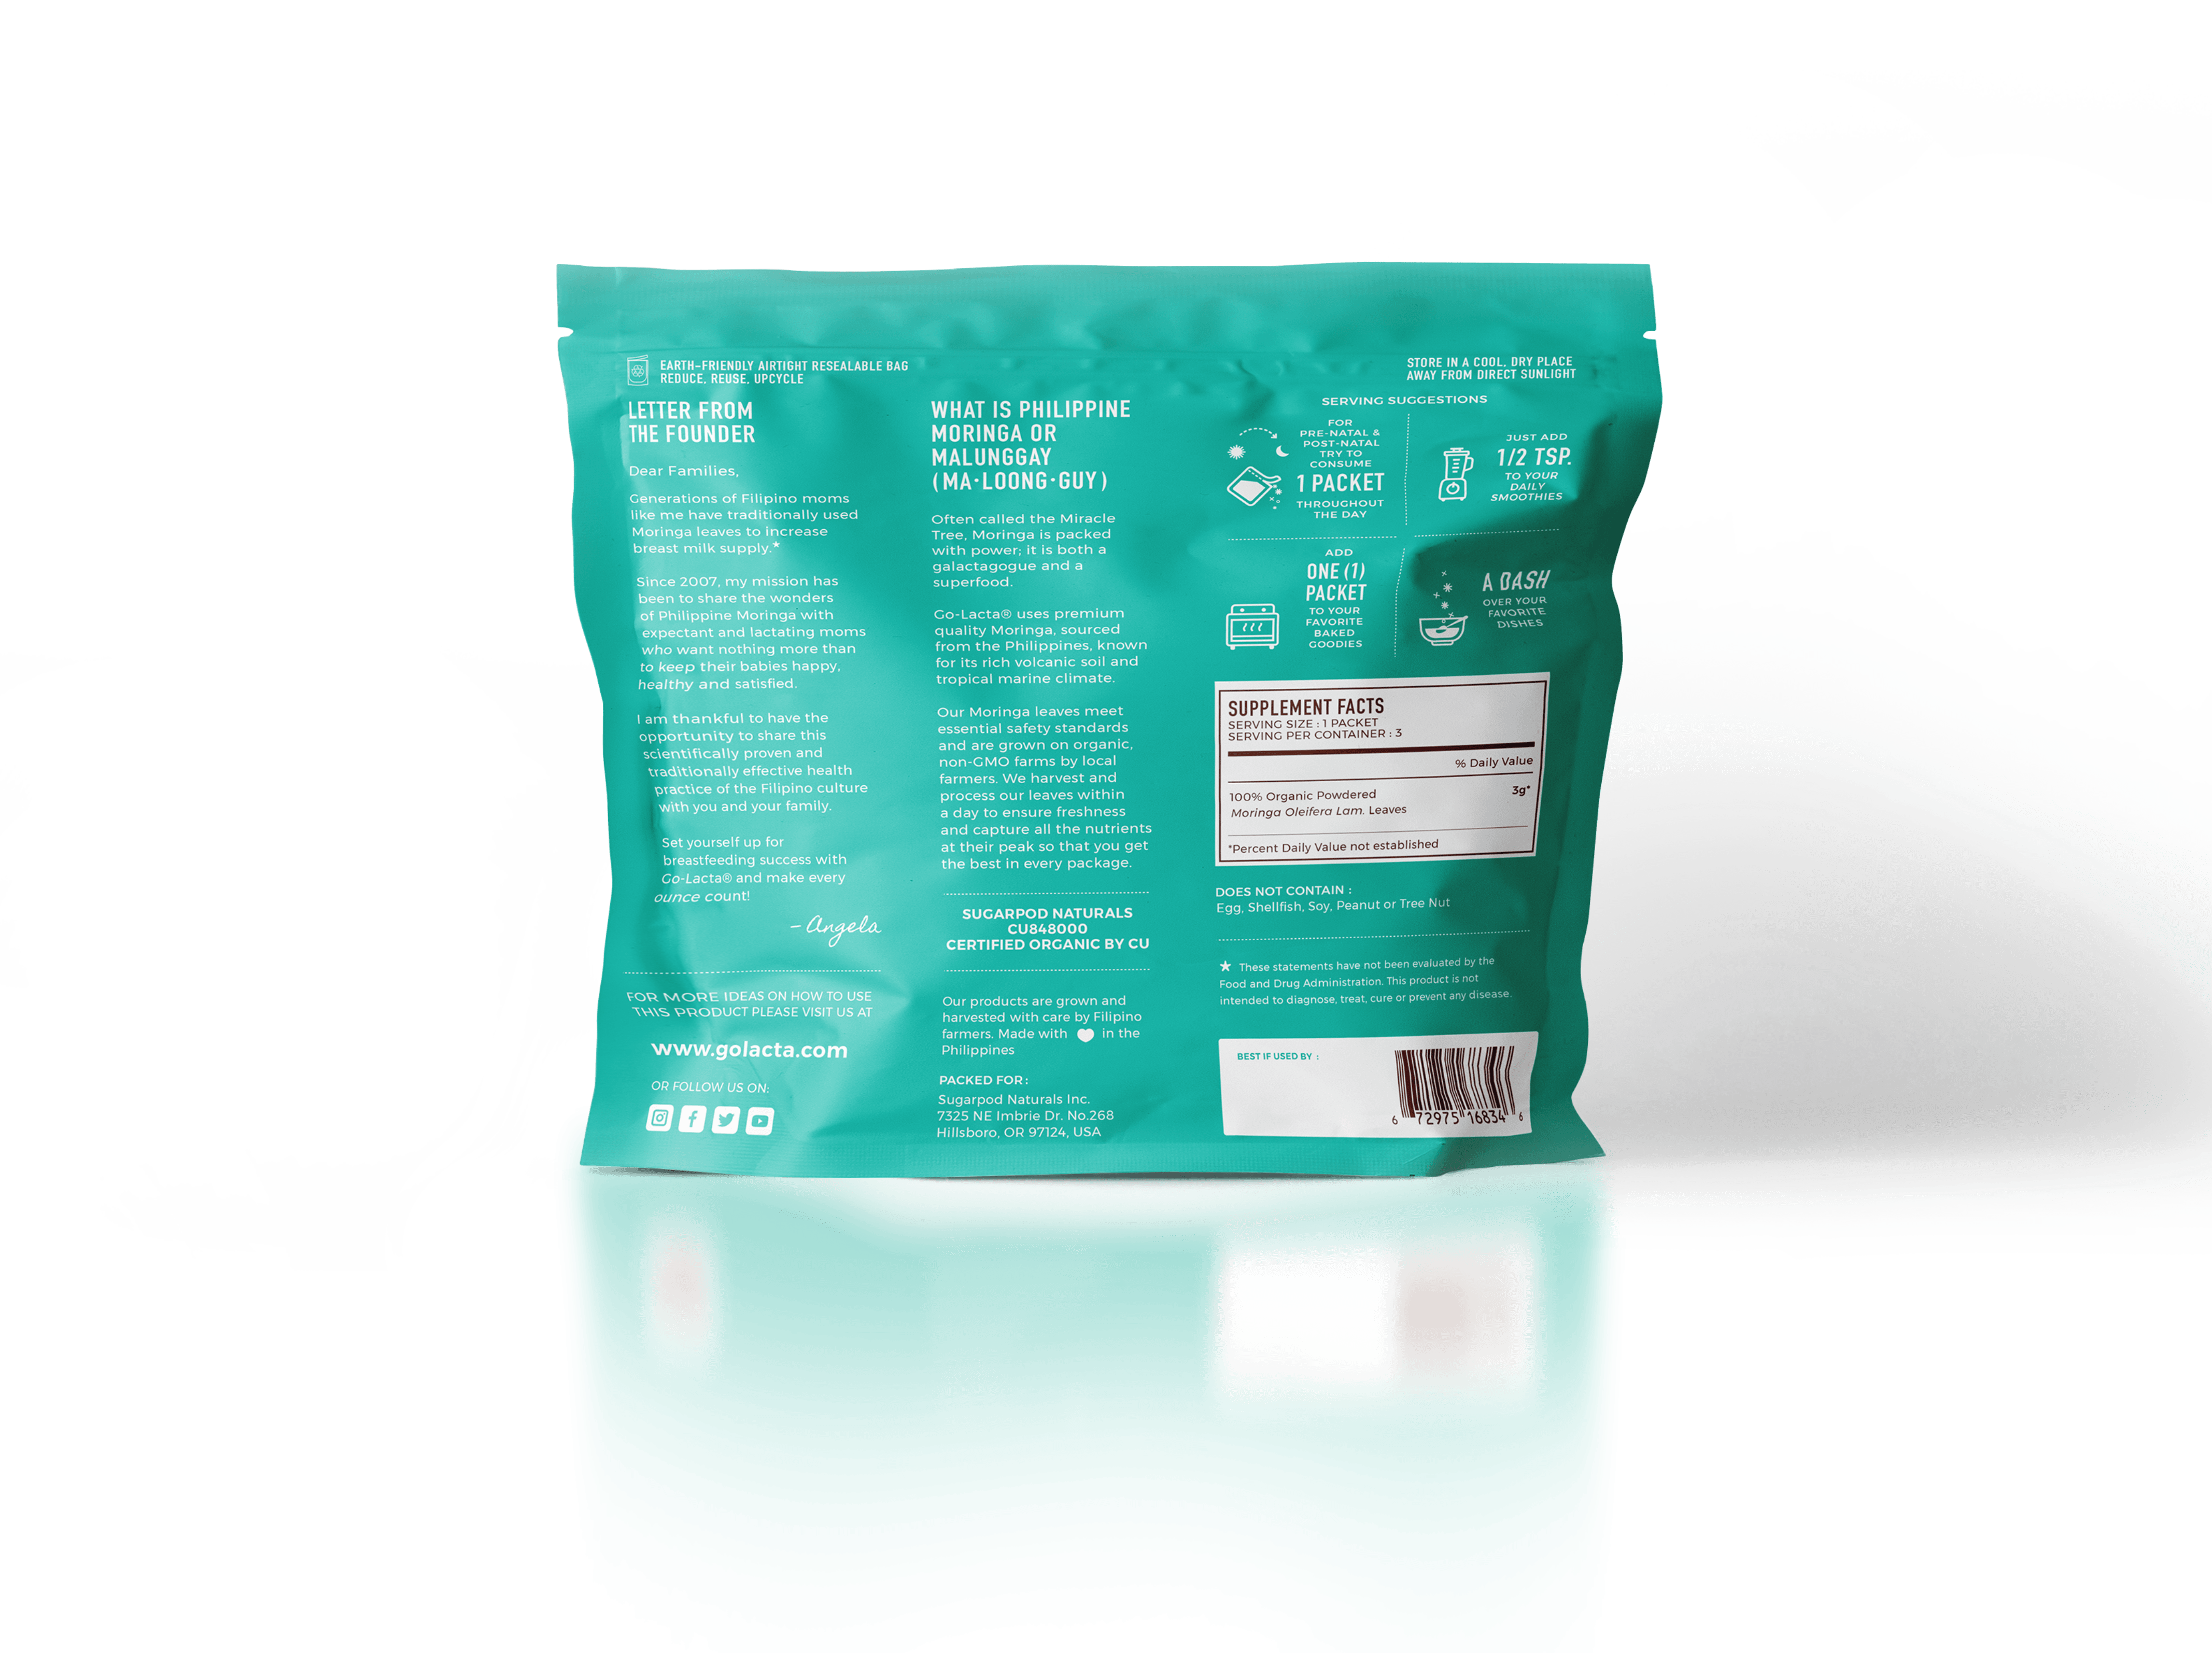 Lactation Moringa Superfood Powder